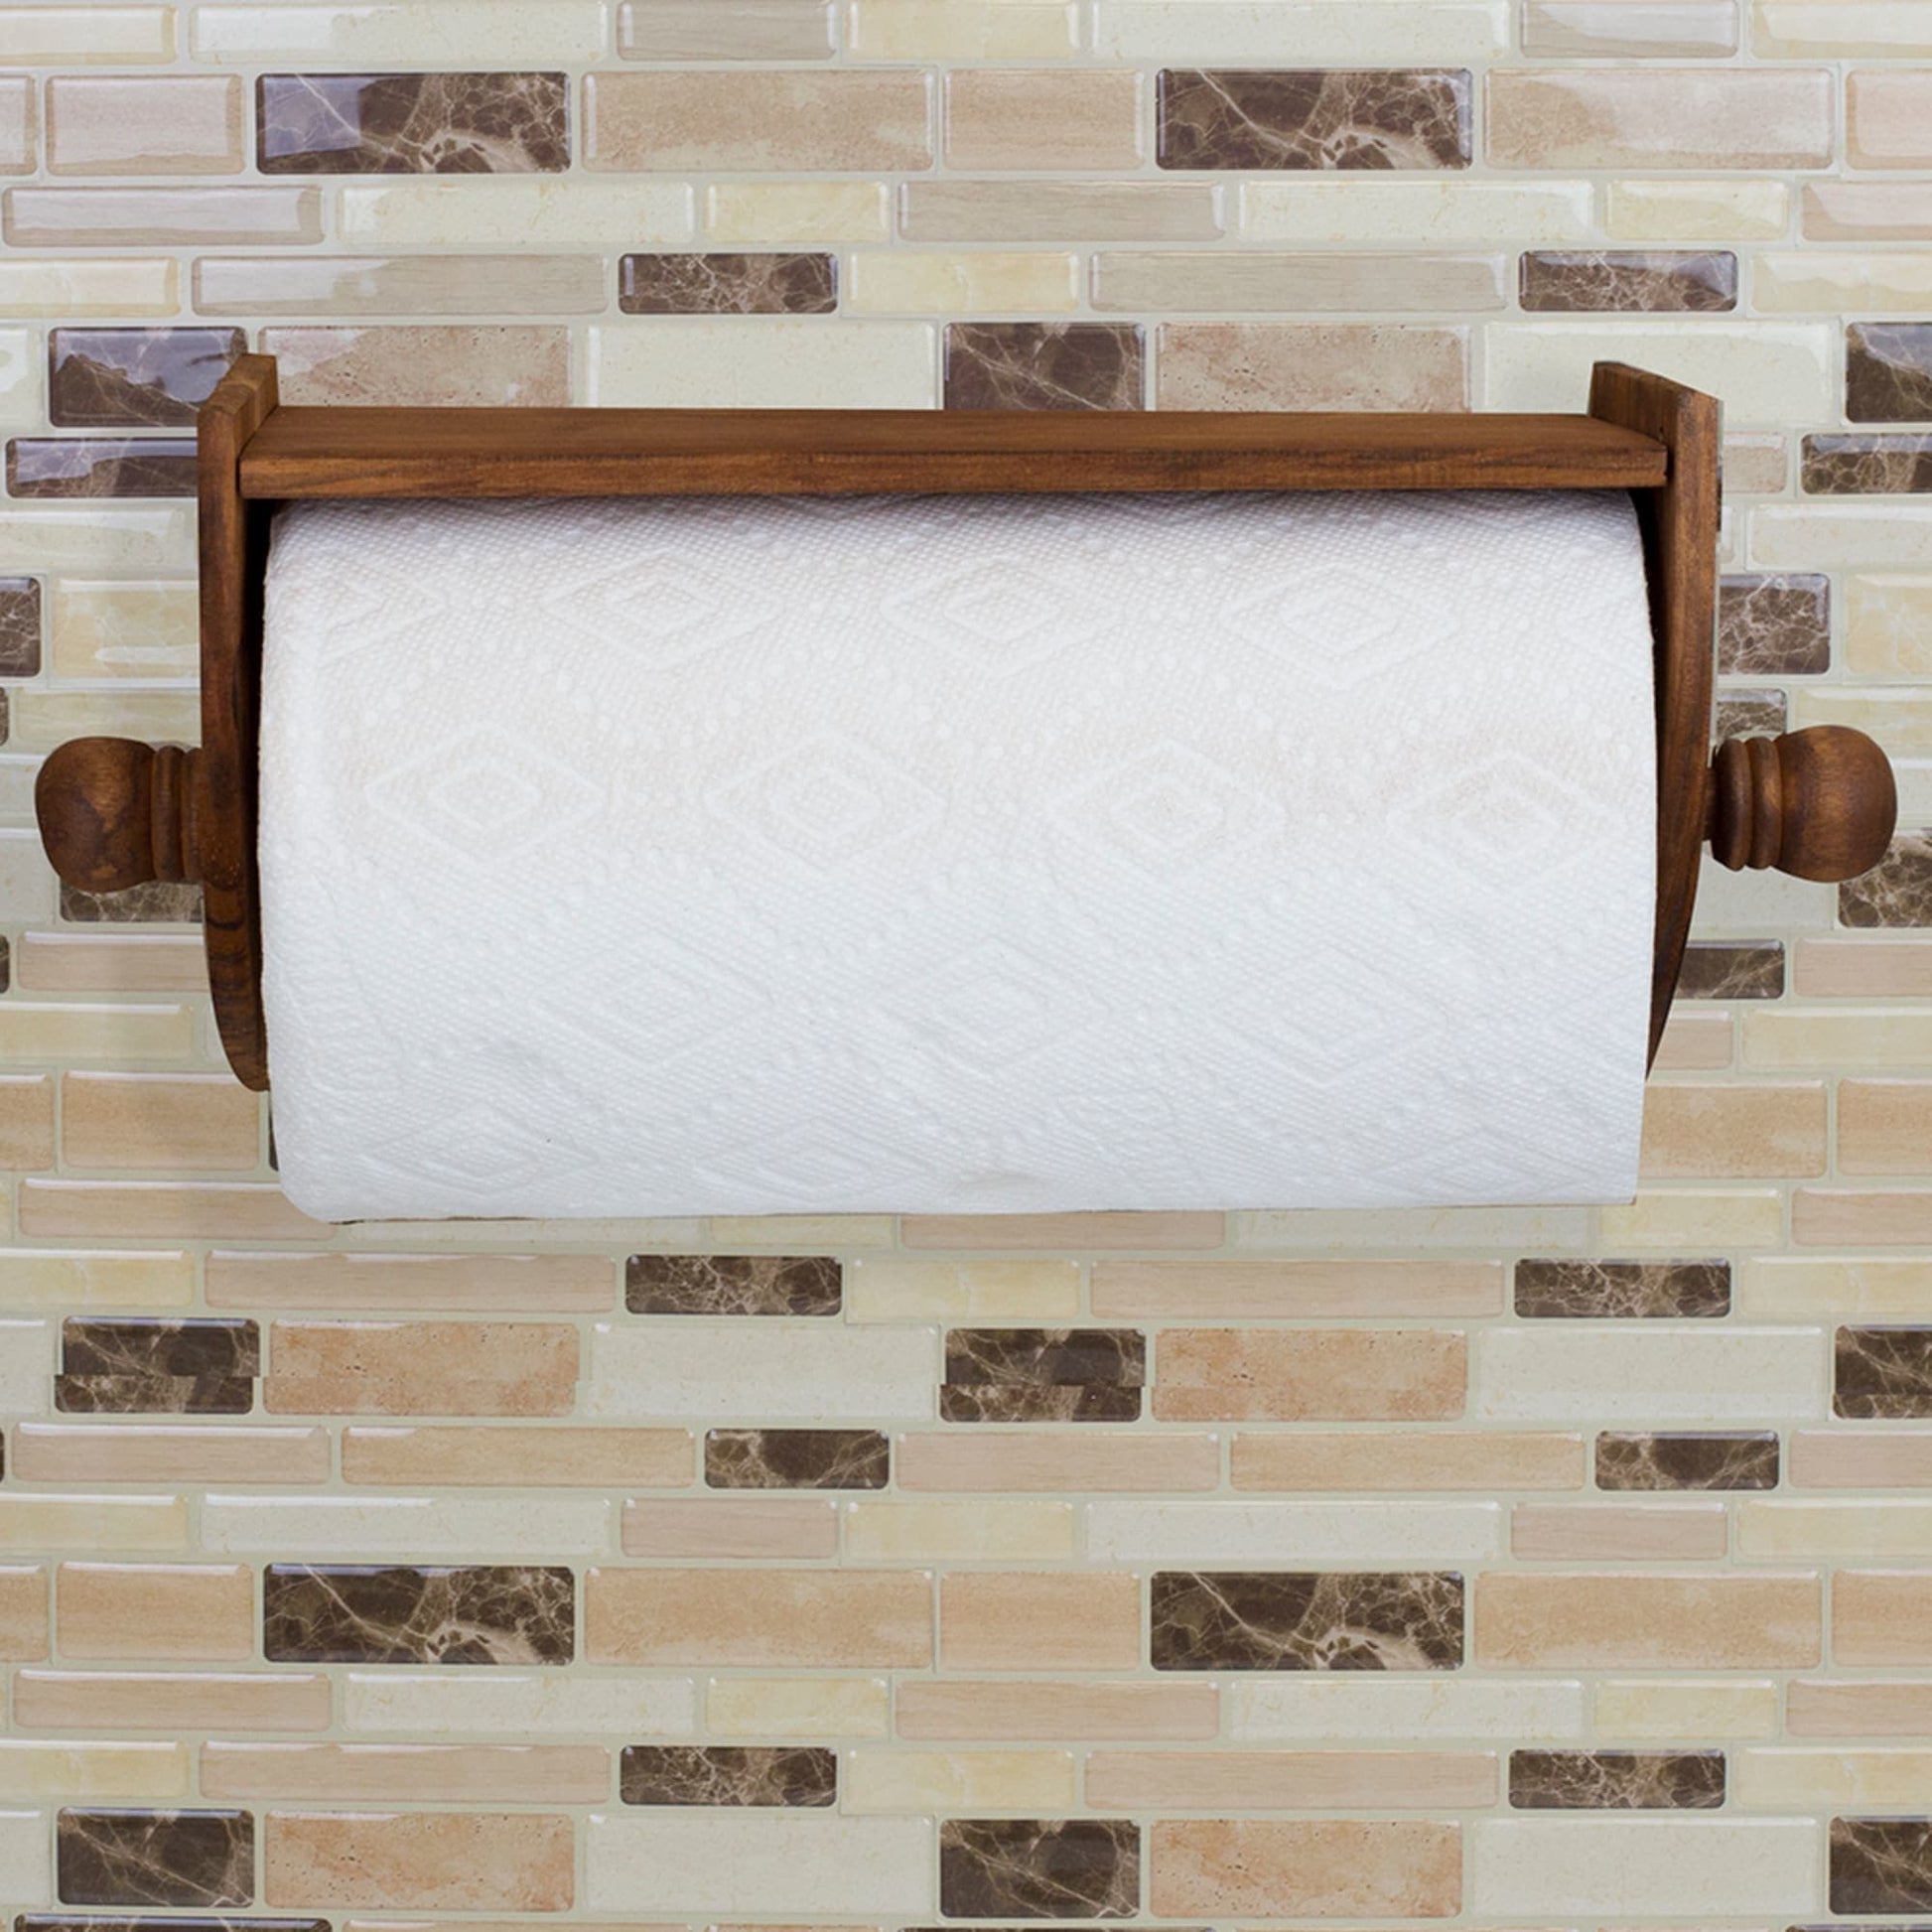 Wall-Mounted Toilet Paper Holder | BATH ORGANIZATION | SHOP HOME BASICS